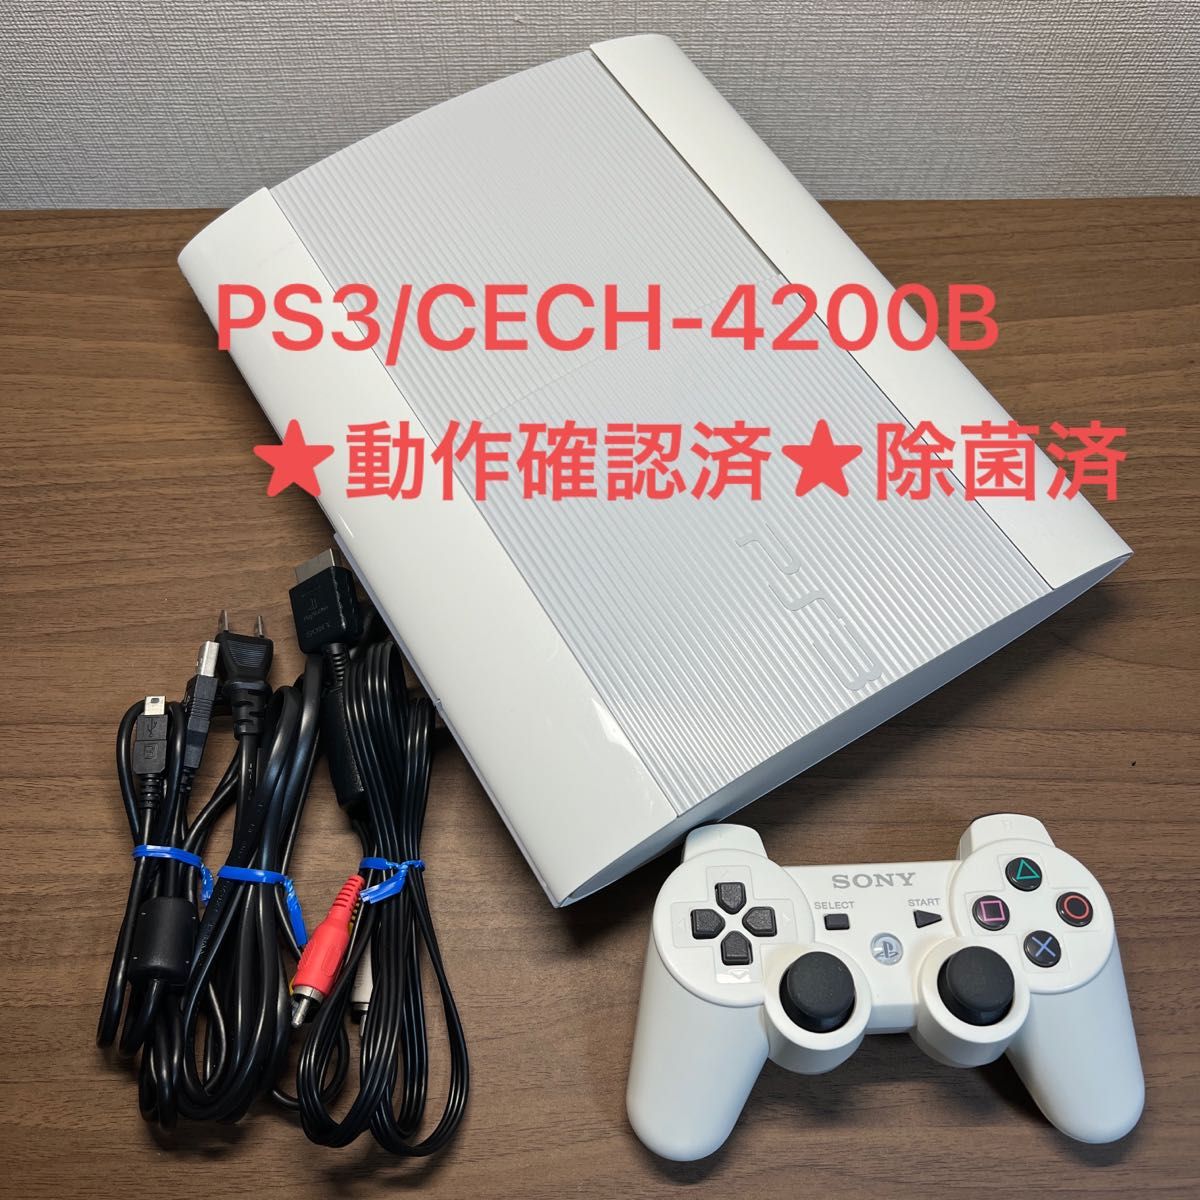 SONY PlayStation3 CECH-4200B クラシックホワイト - ruizvillandiego.com